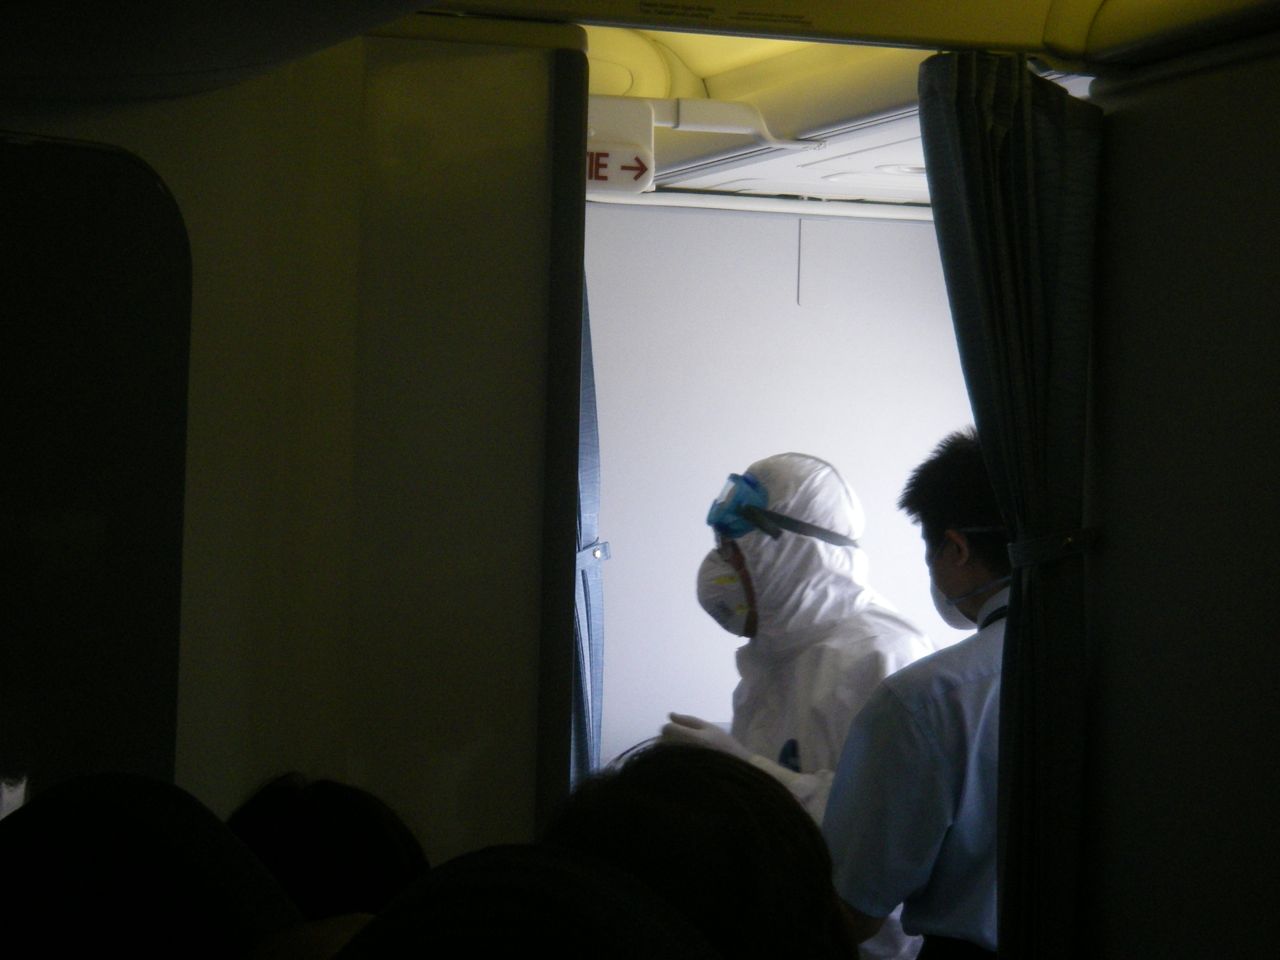 quarantine officials on board